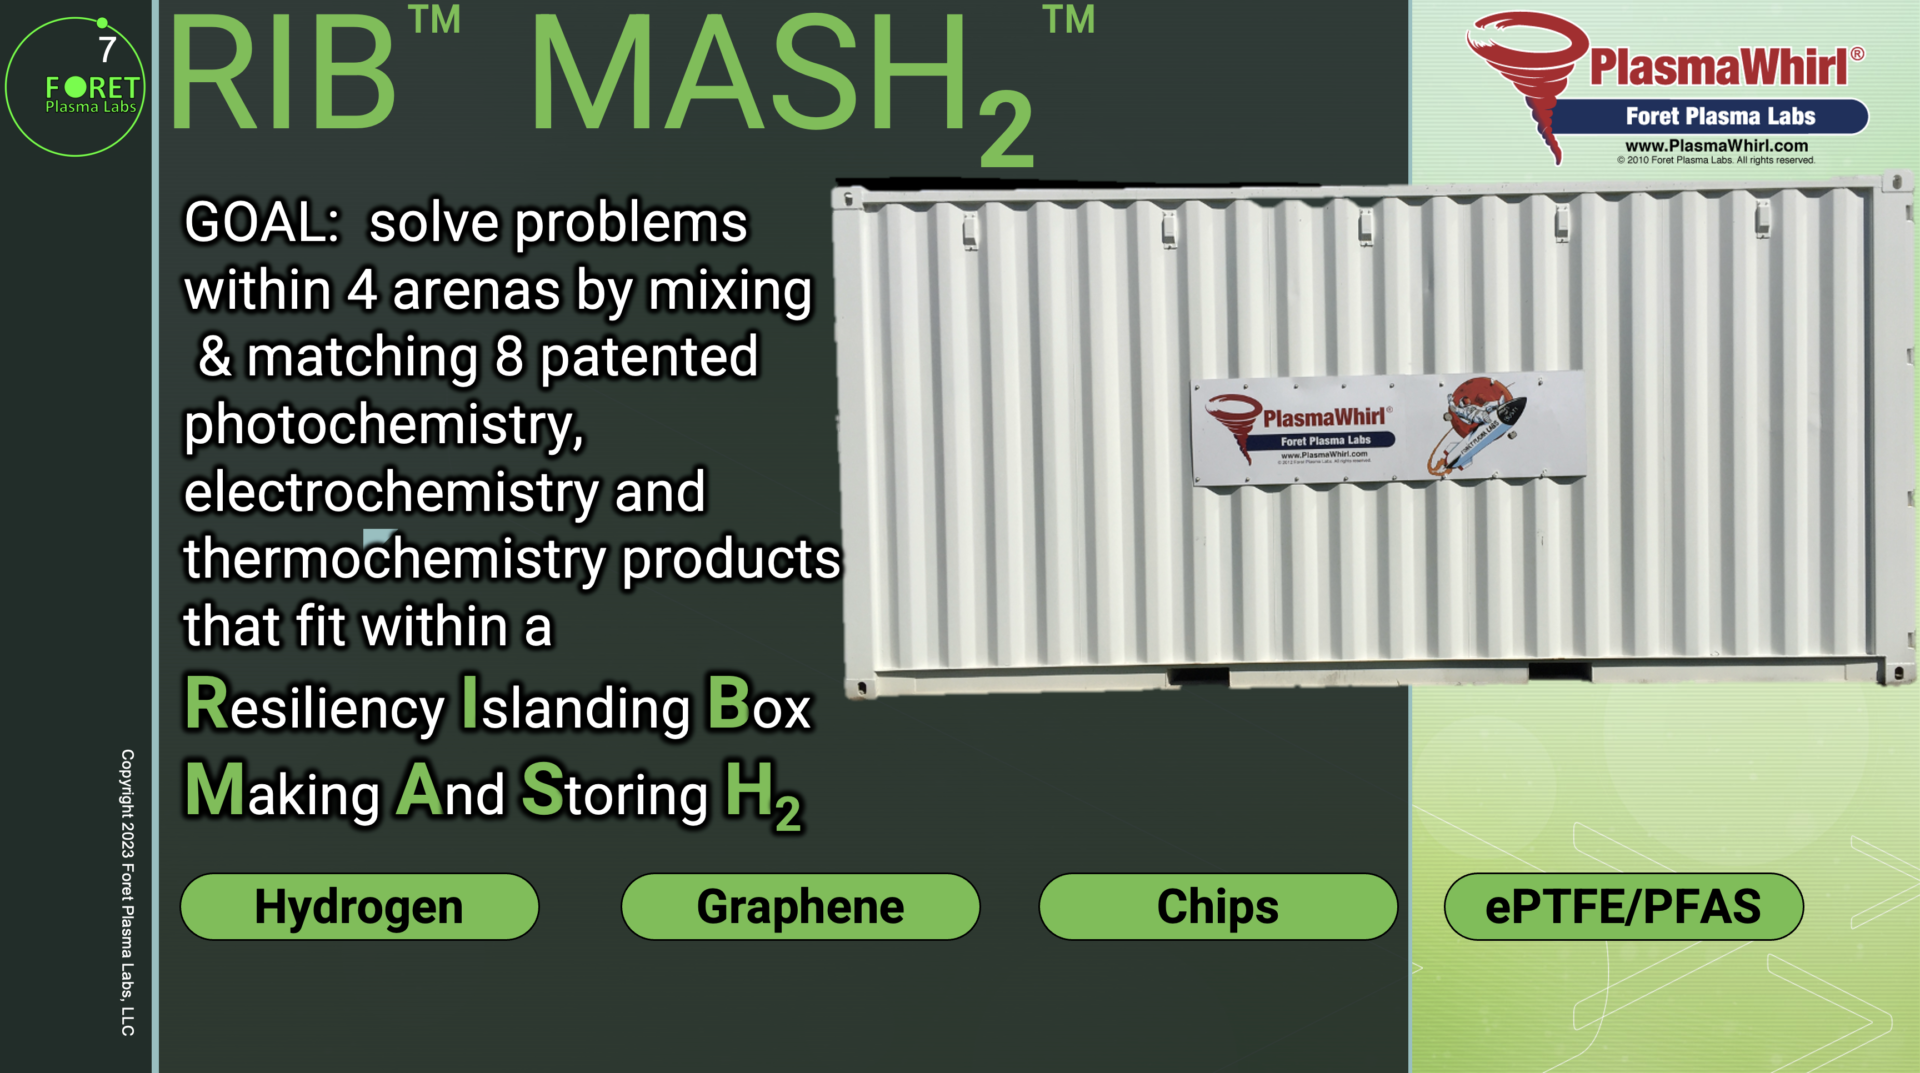 A screen shot of the mash 2 website.